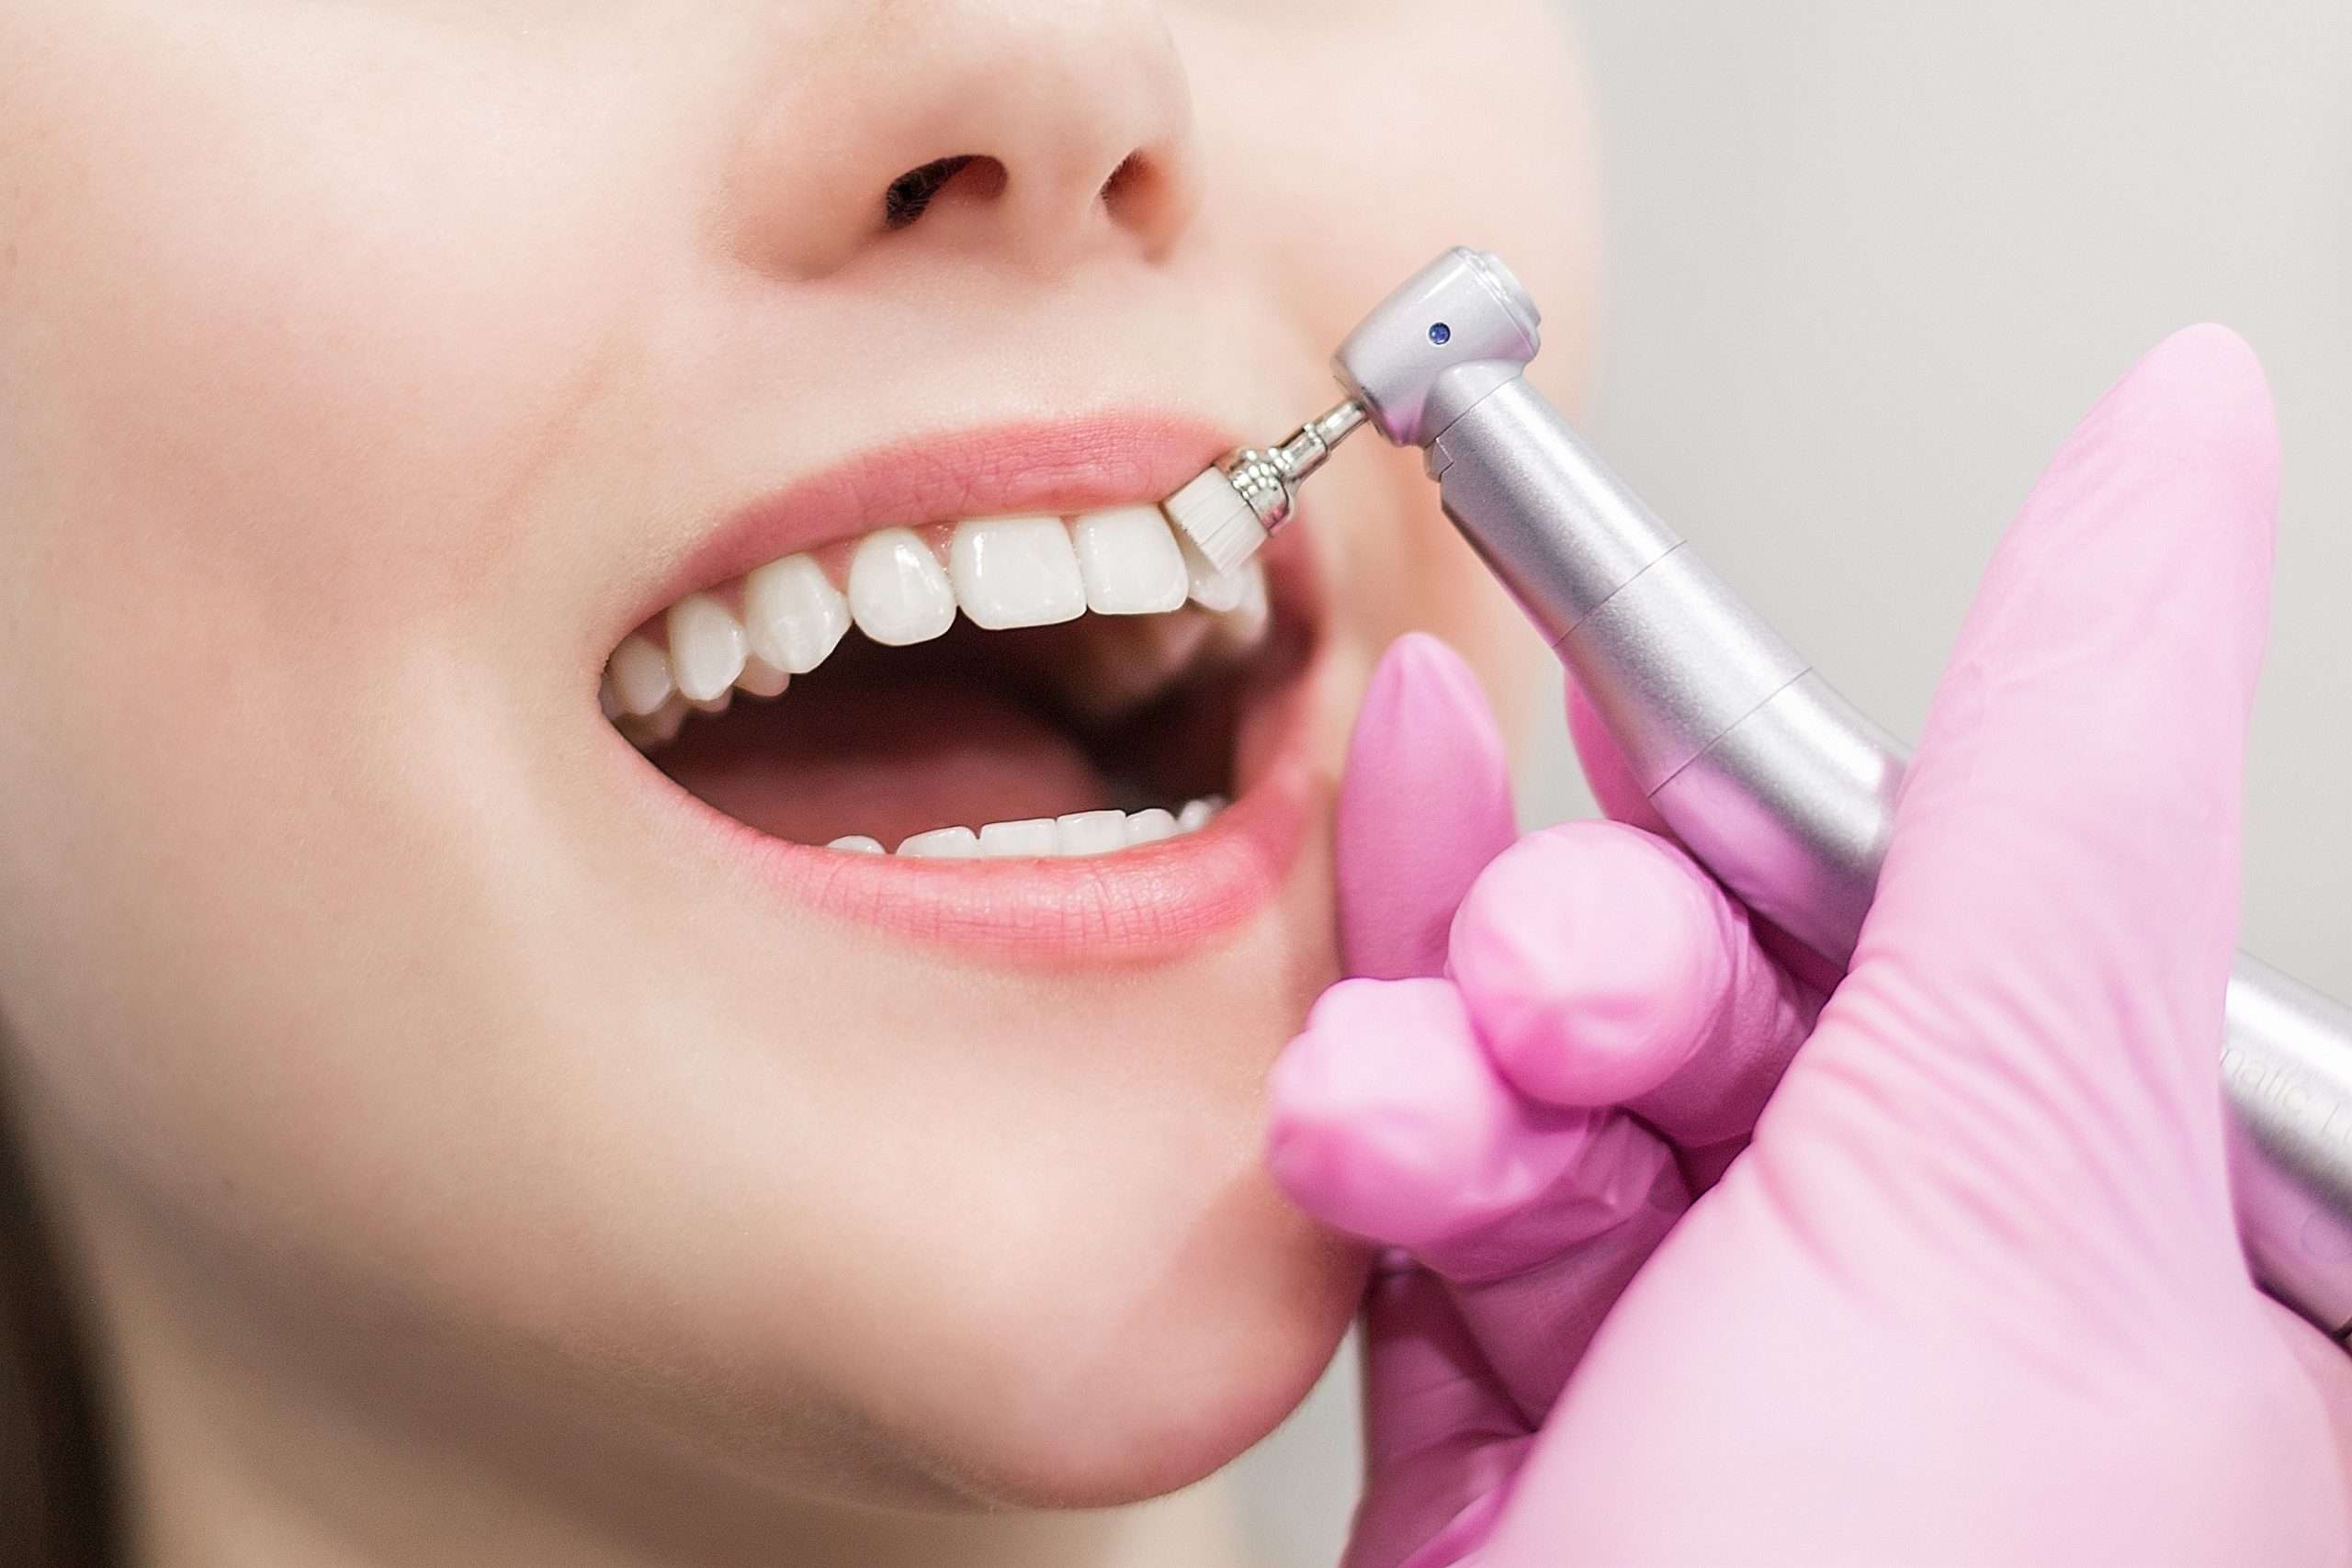 dentist brushes teeth young girl teeth whitening 2022 11 15 05 20 50 utc scaled